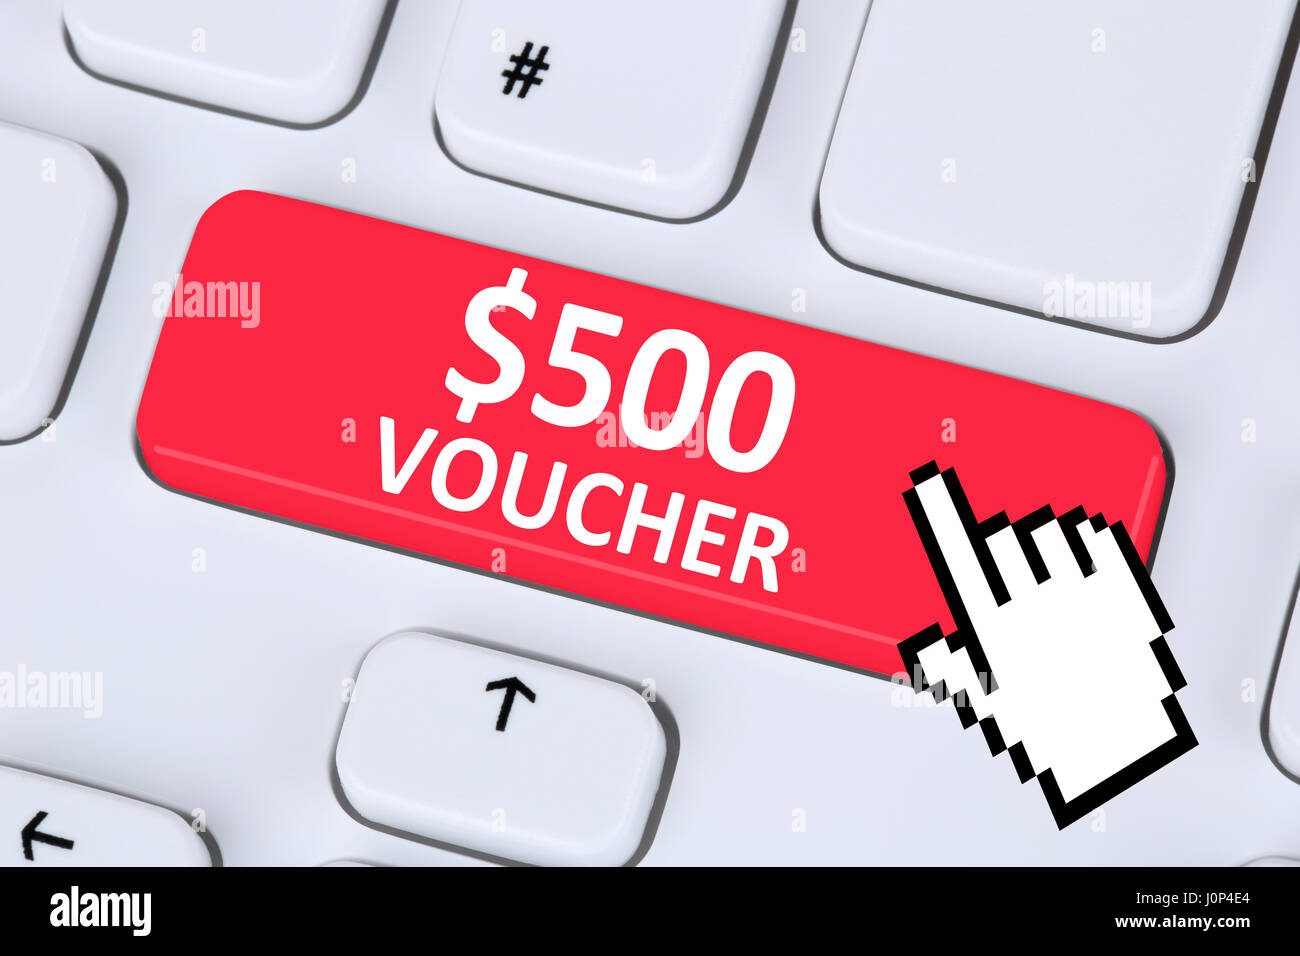 500 Dollar voucher gift discount sale online shopping internet shop computer Stock Photo